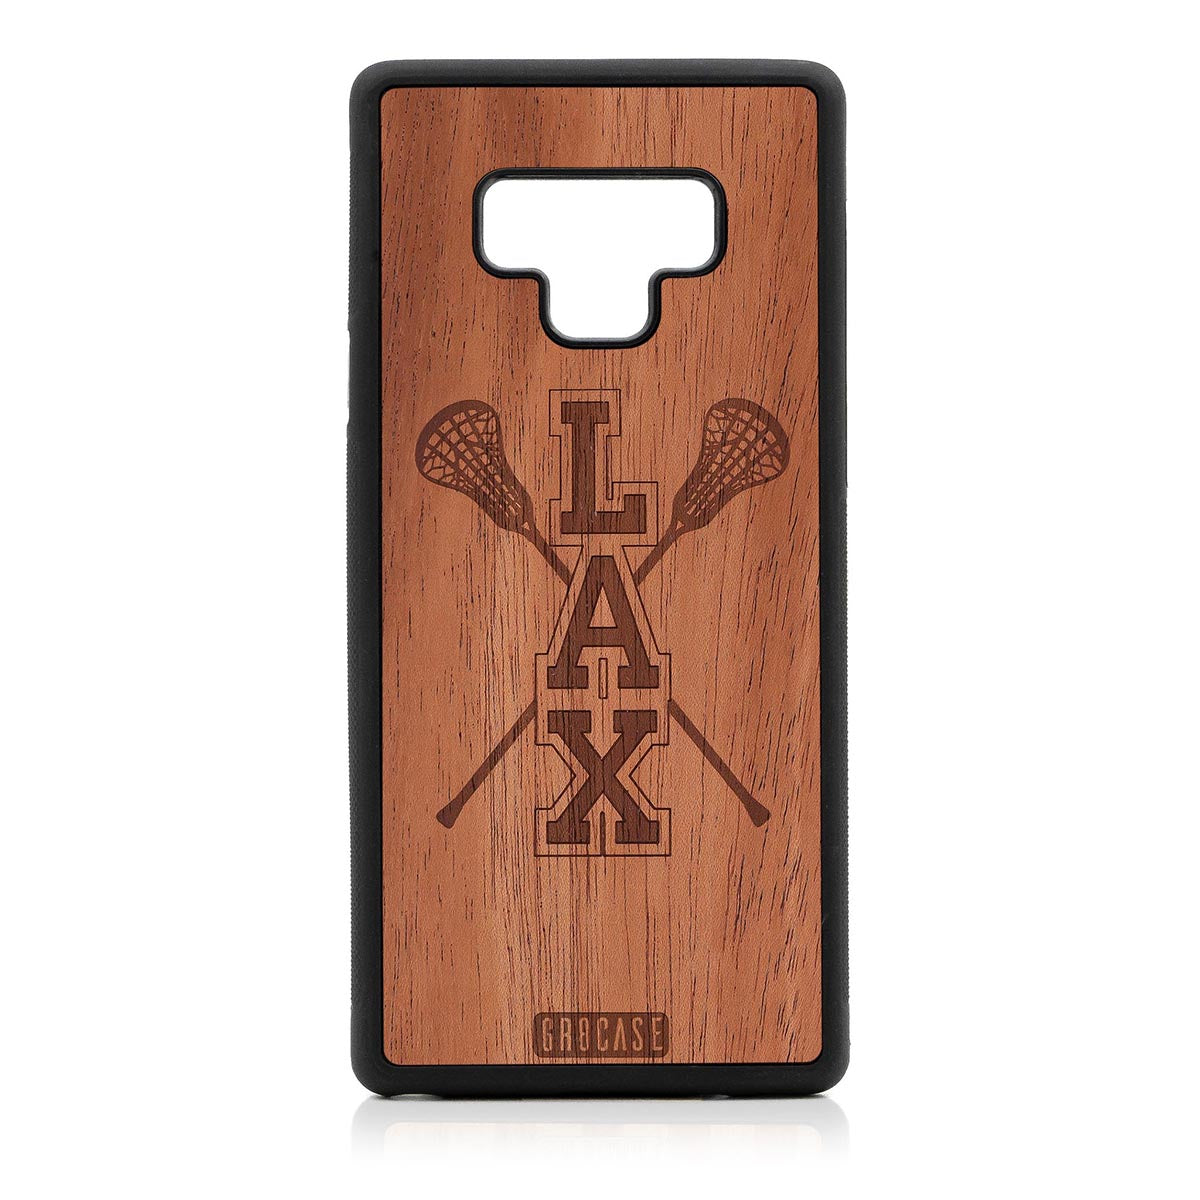 Lacrosse (LAX) Sticks Design Wood Case Samsung Galaxy Note 9 by GR8CASE